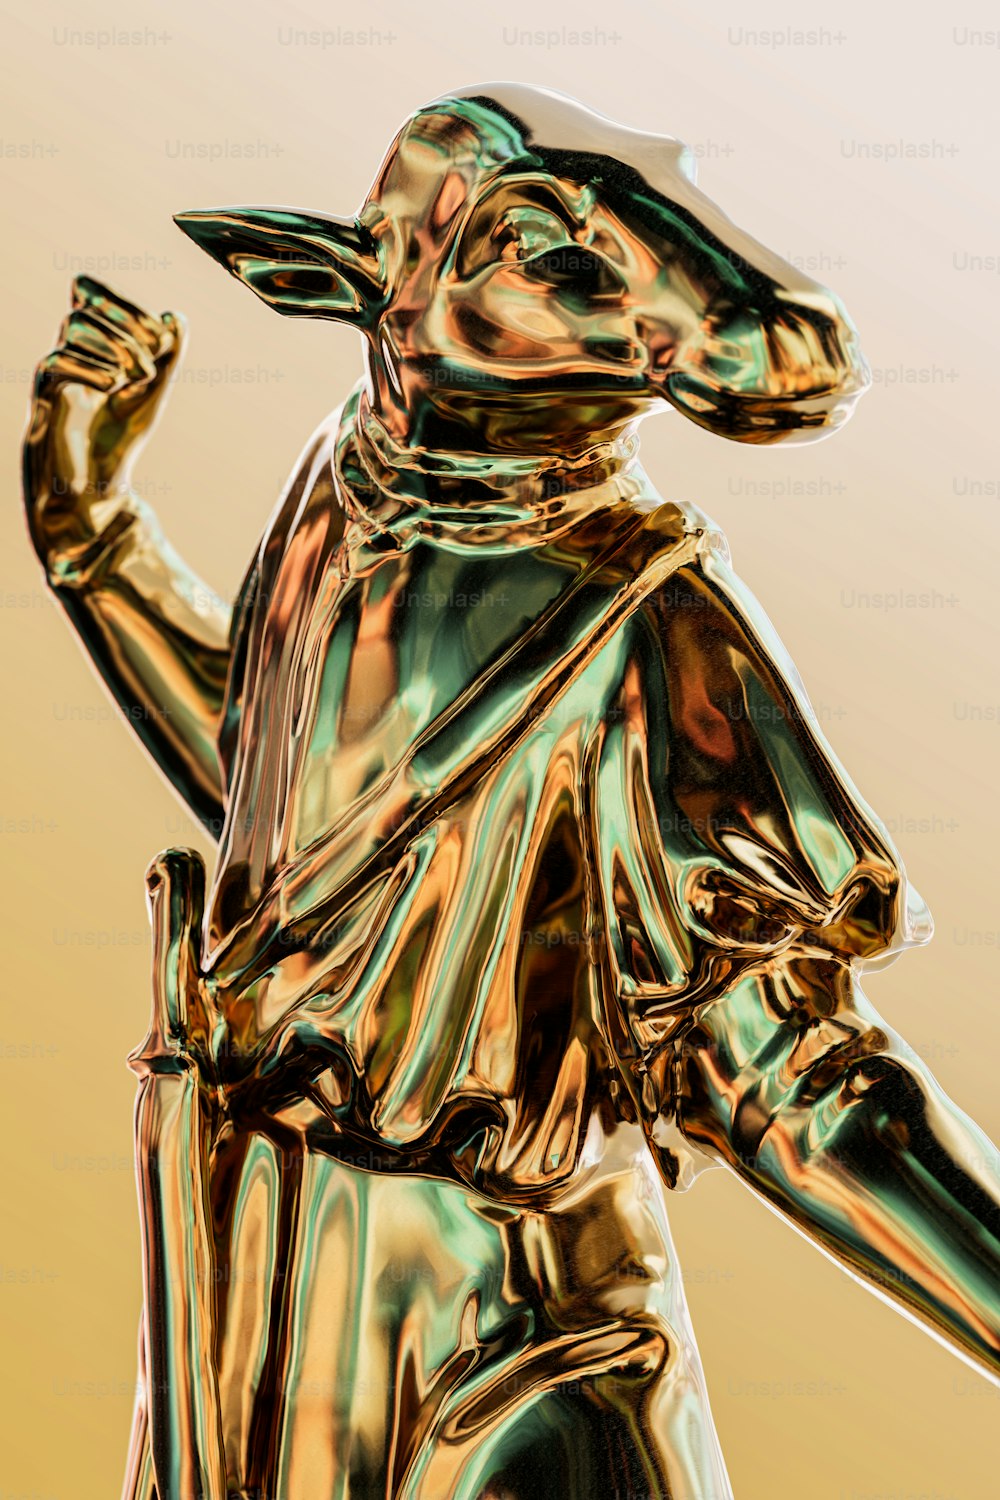 a shiny gold statue of a man holding a baseball bat